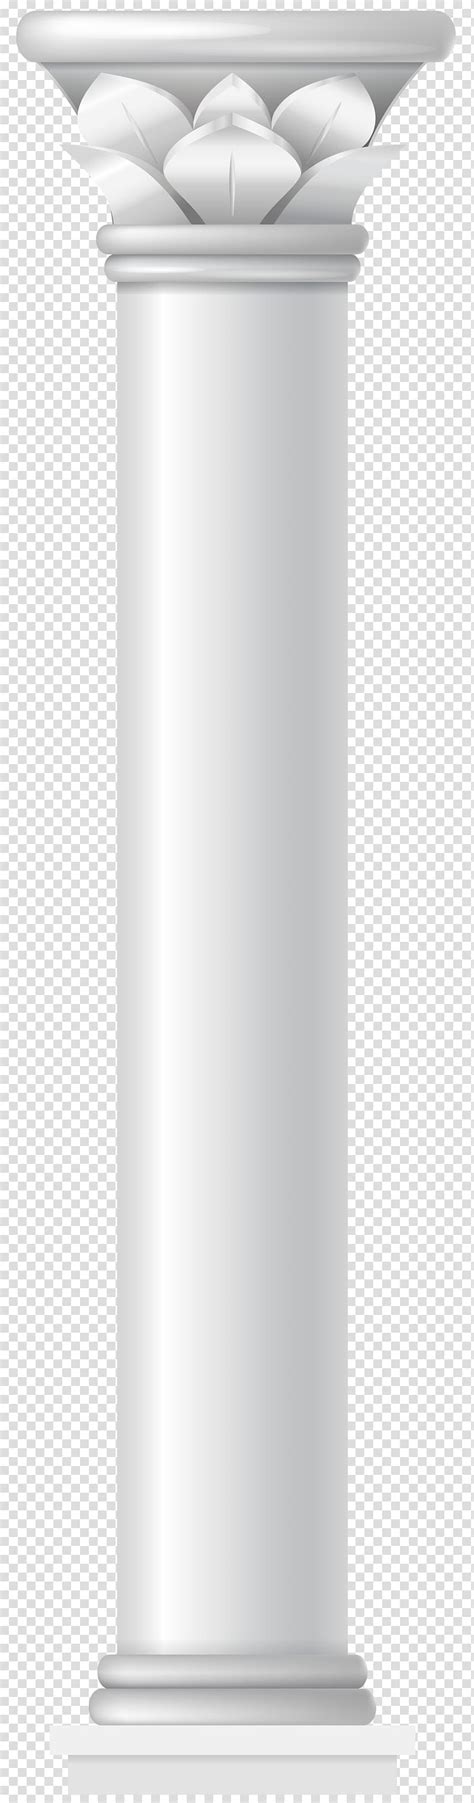 White Pillar Digital Illustration Angle Cylinder Pillar Transparent